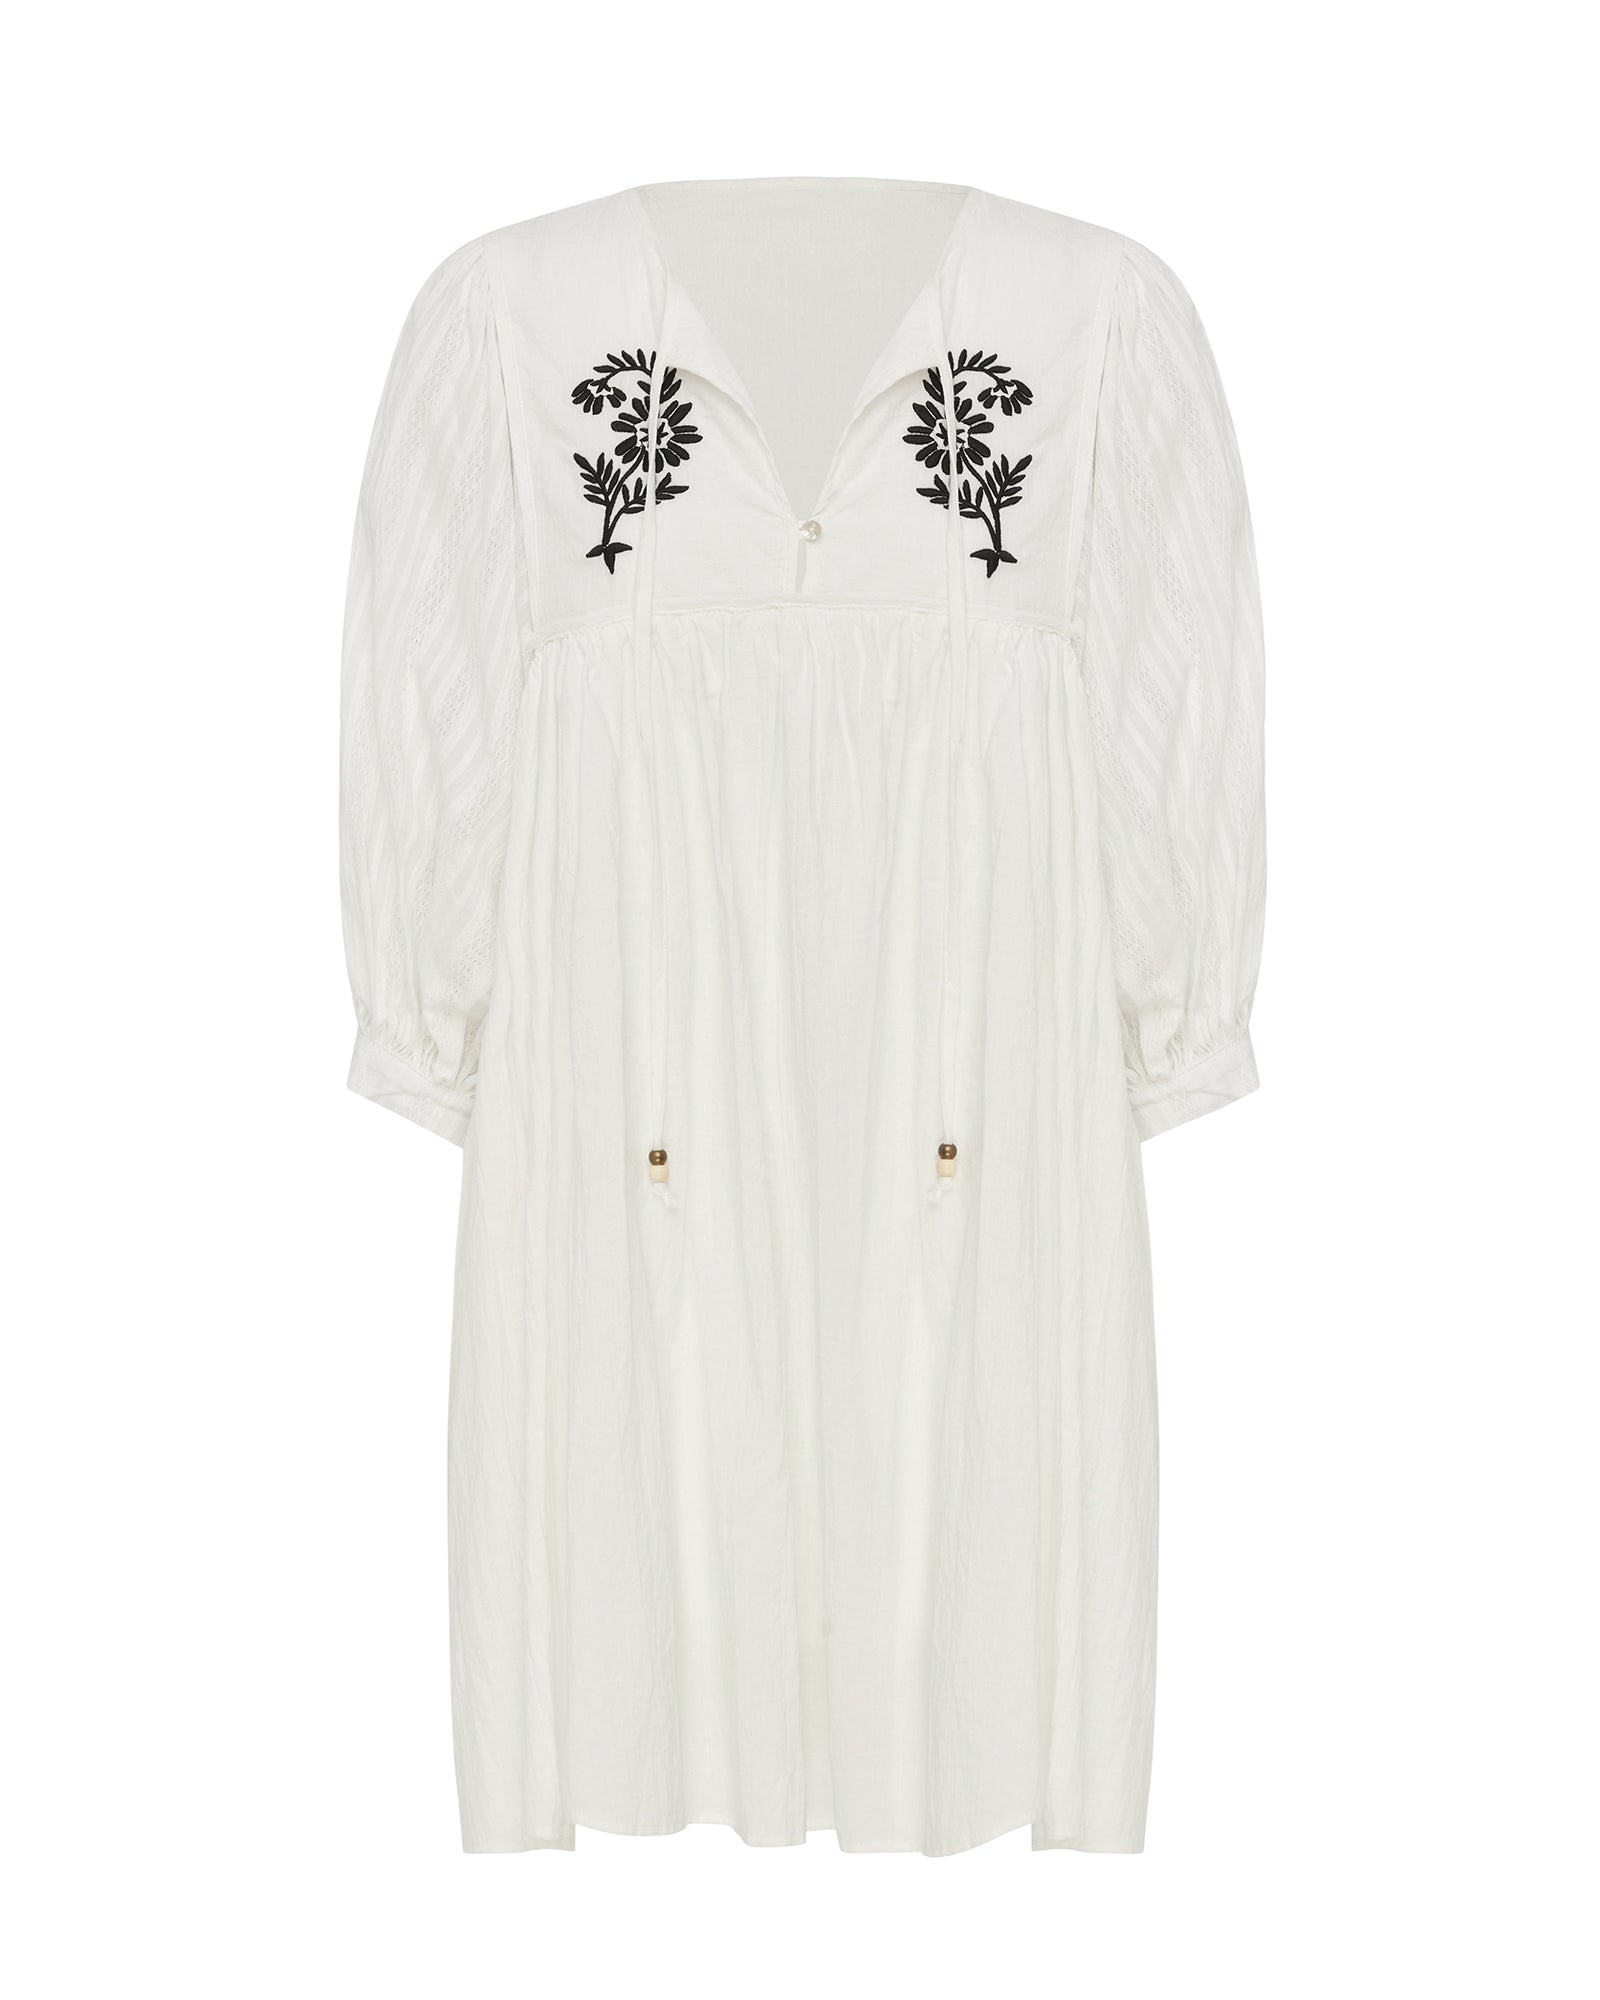 Gema White Embroidered Smock Dress